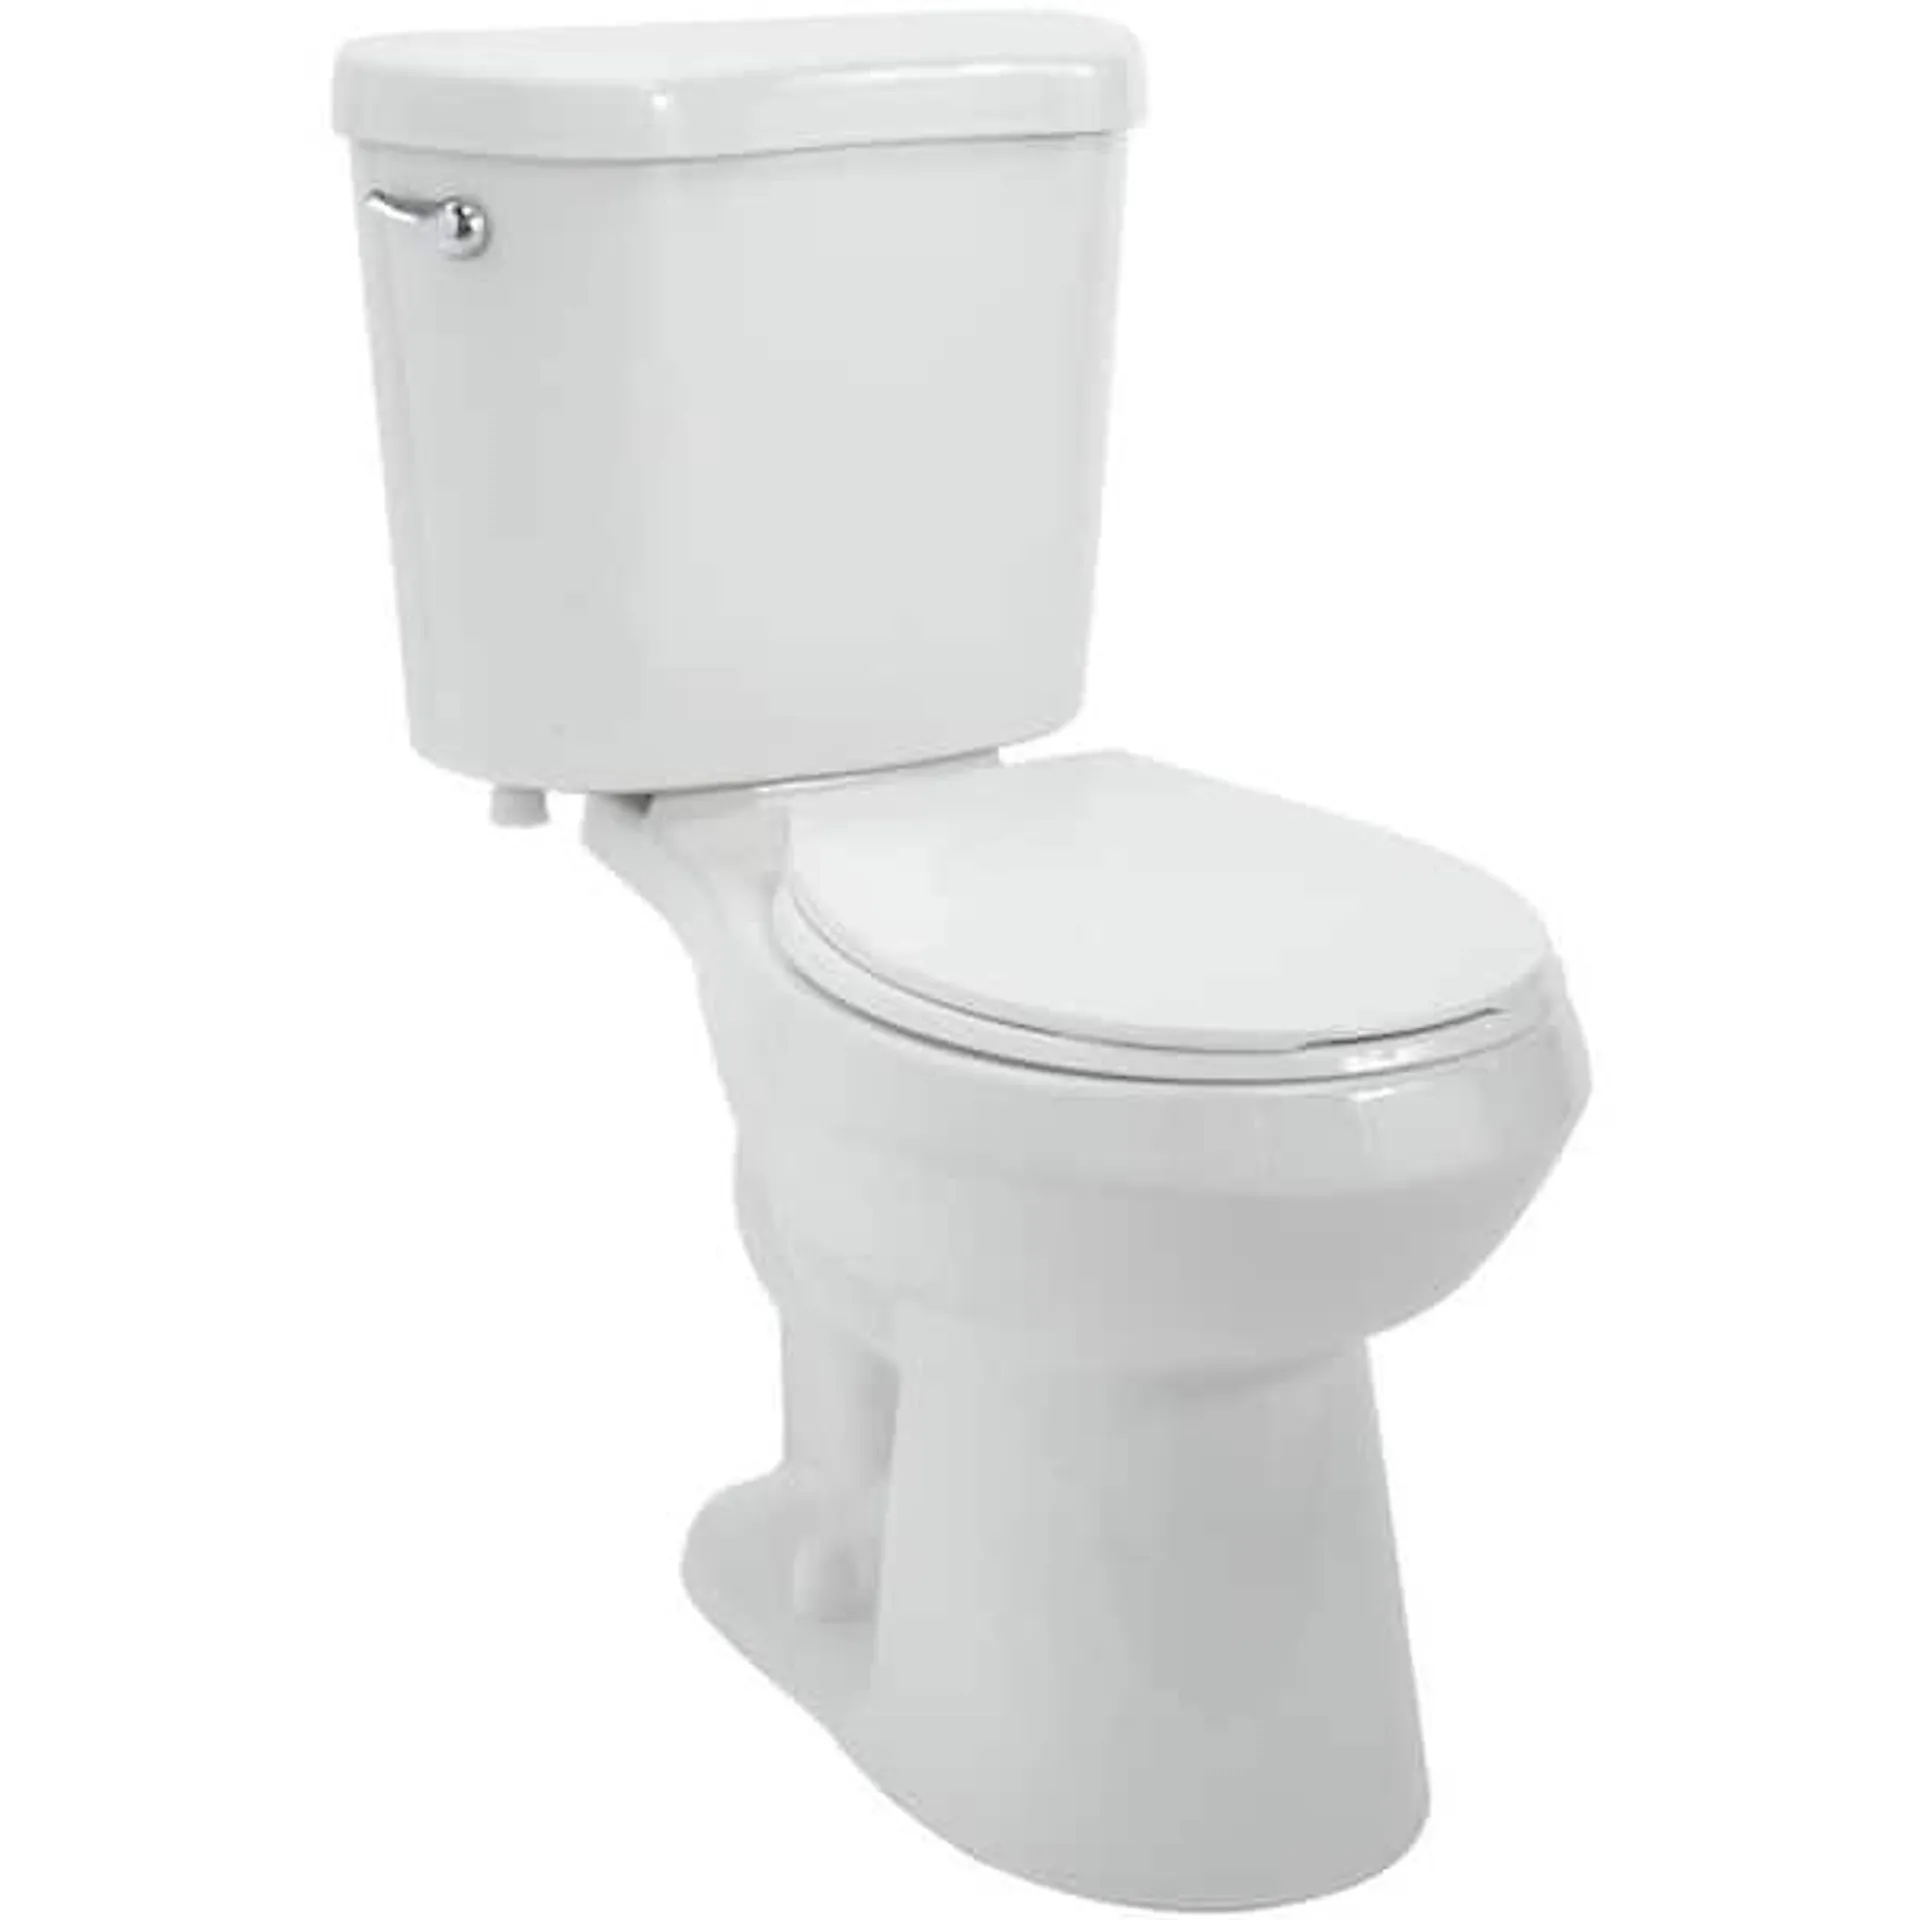 2-Piece 1.28 GPF High Efficiency Single Flush Round Toilet in White